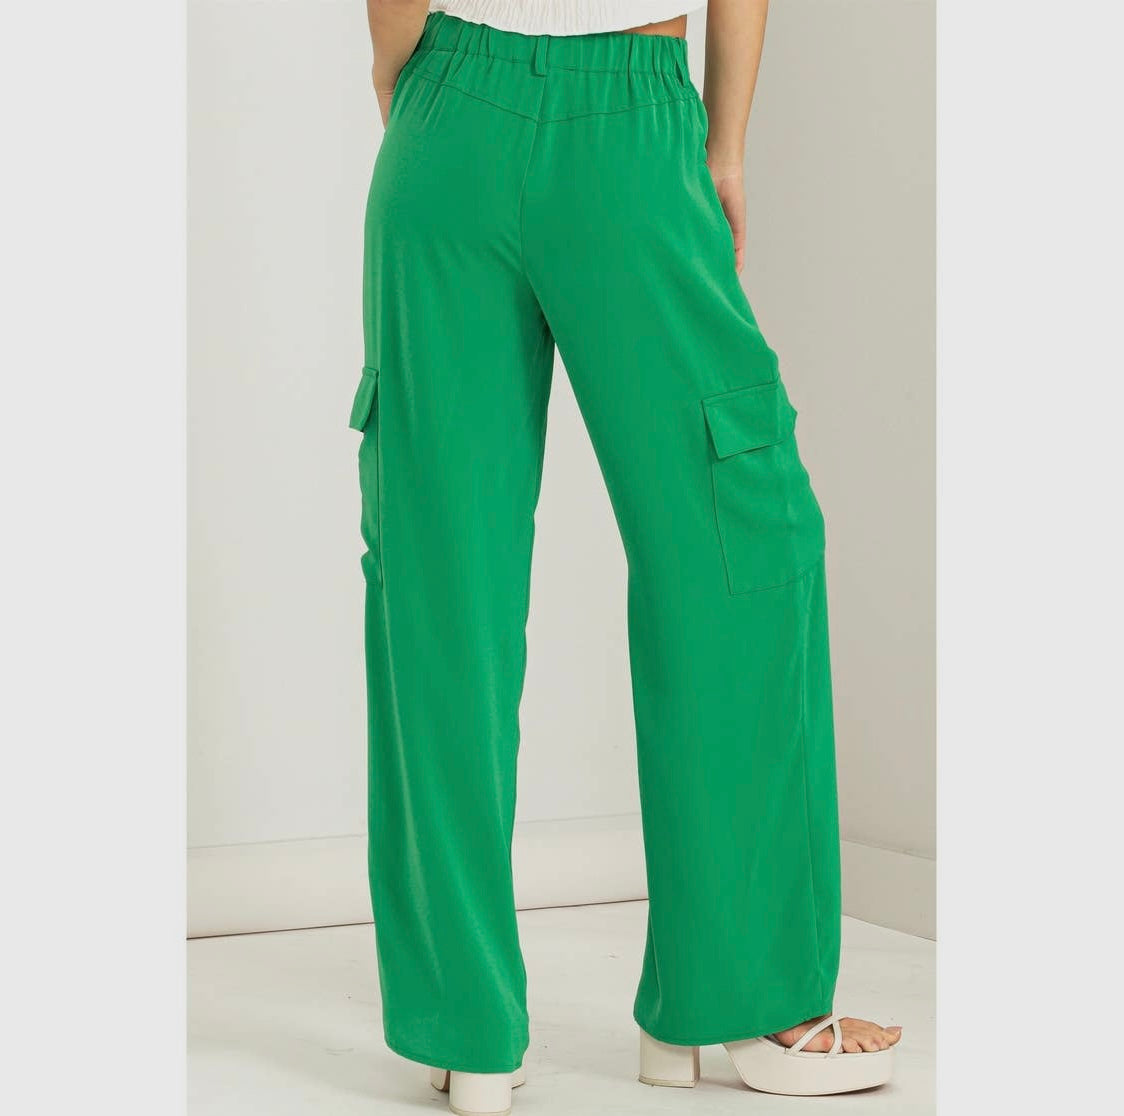 Trendsetter Vibrant Green Relaxed Midrise Pants